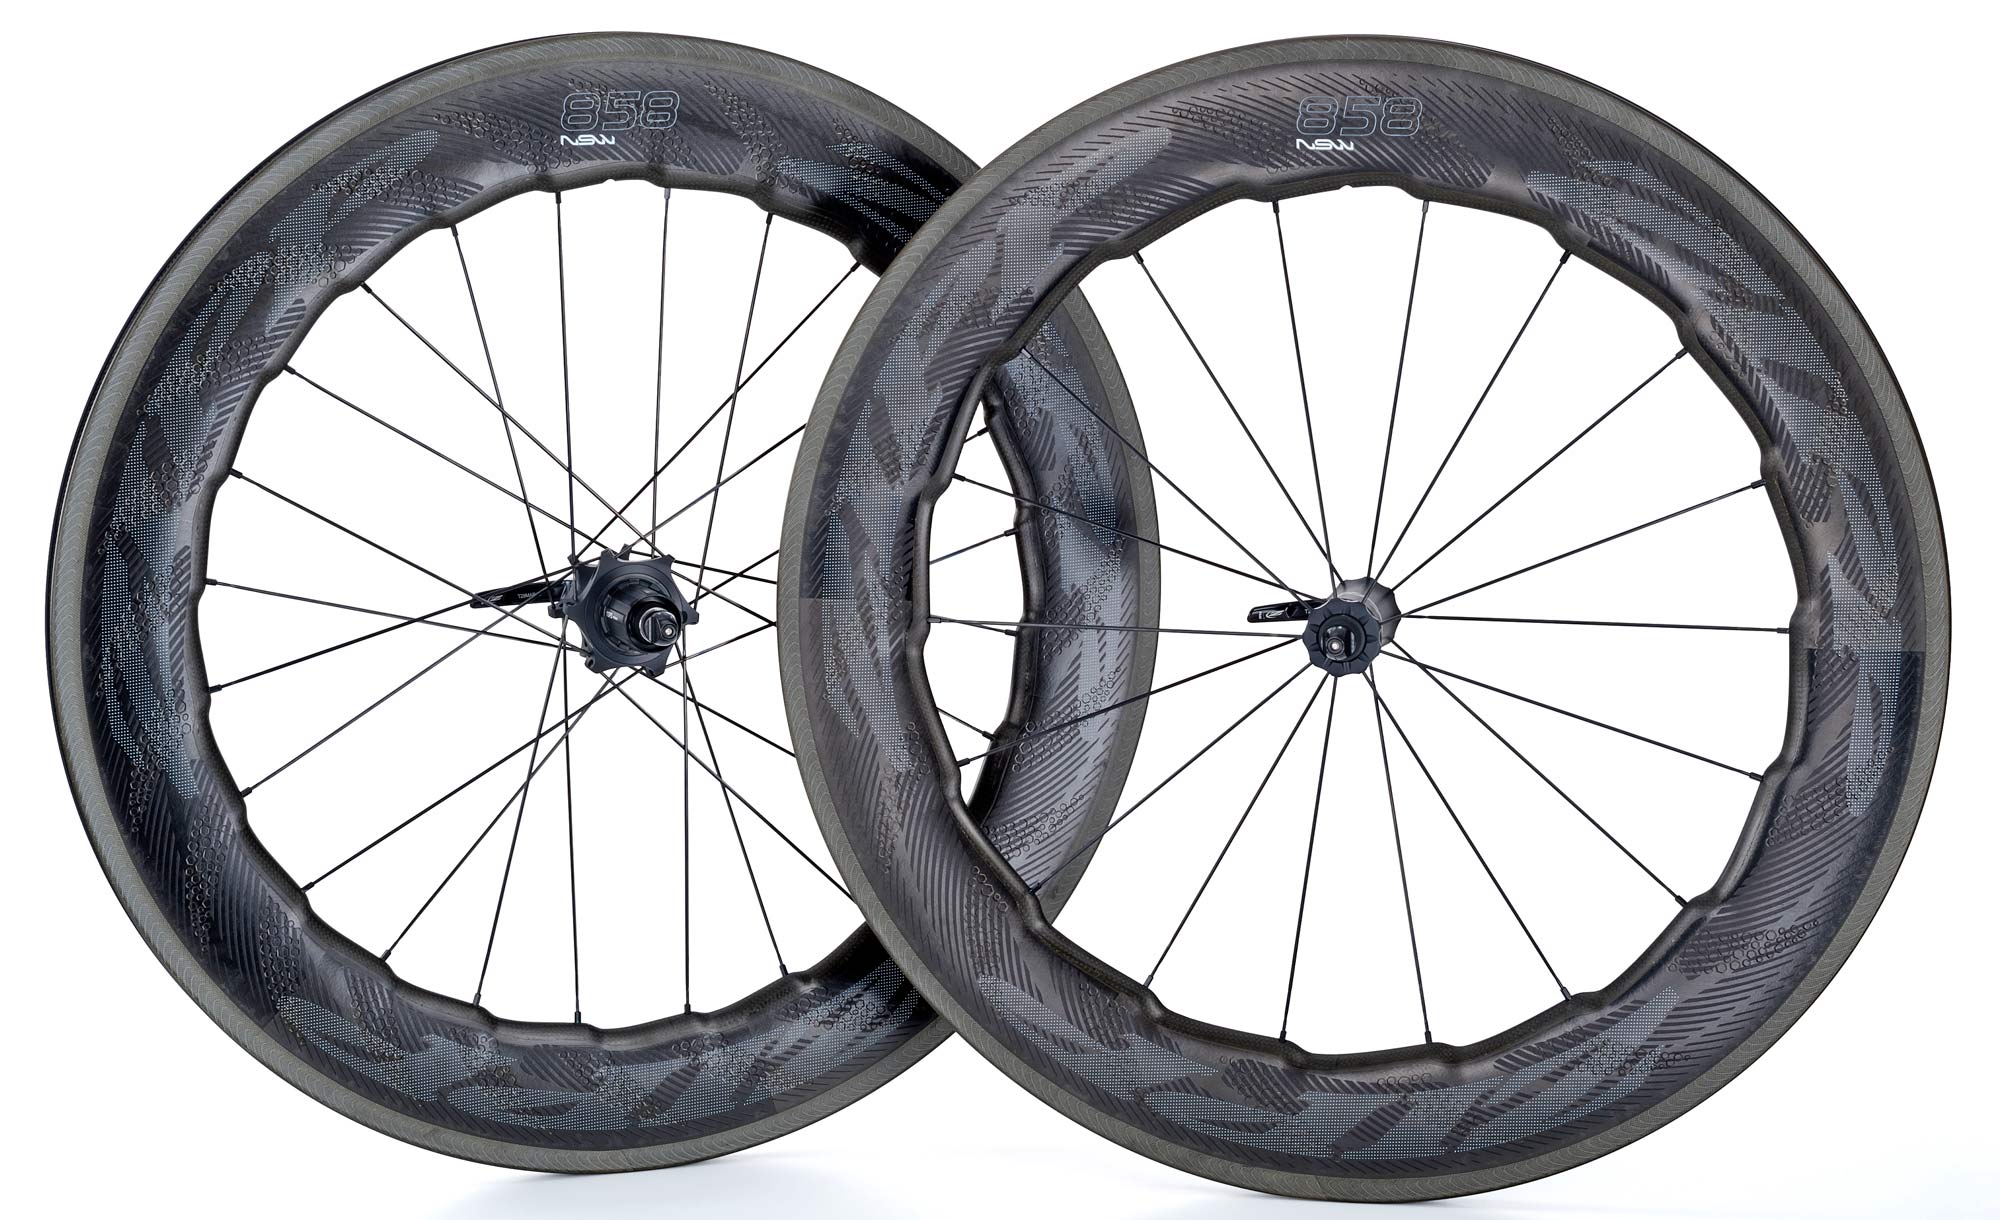 Zipp 858 NSW aero deep section carbon clincher road bike race wheels rim brake wheelset